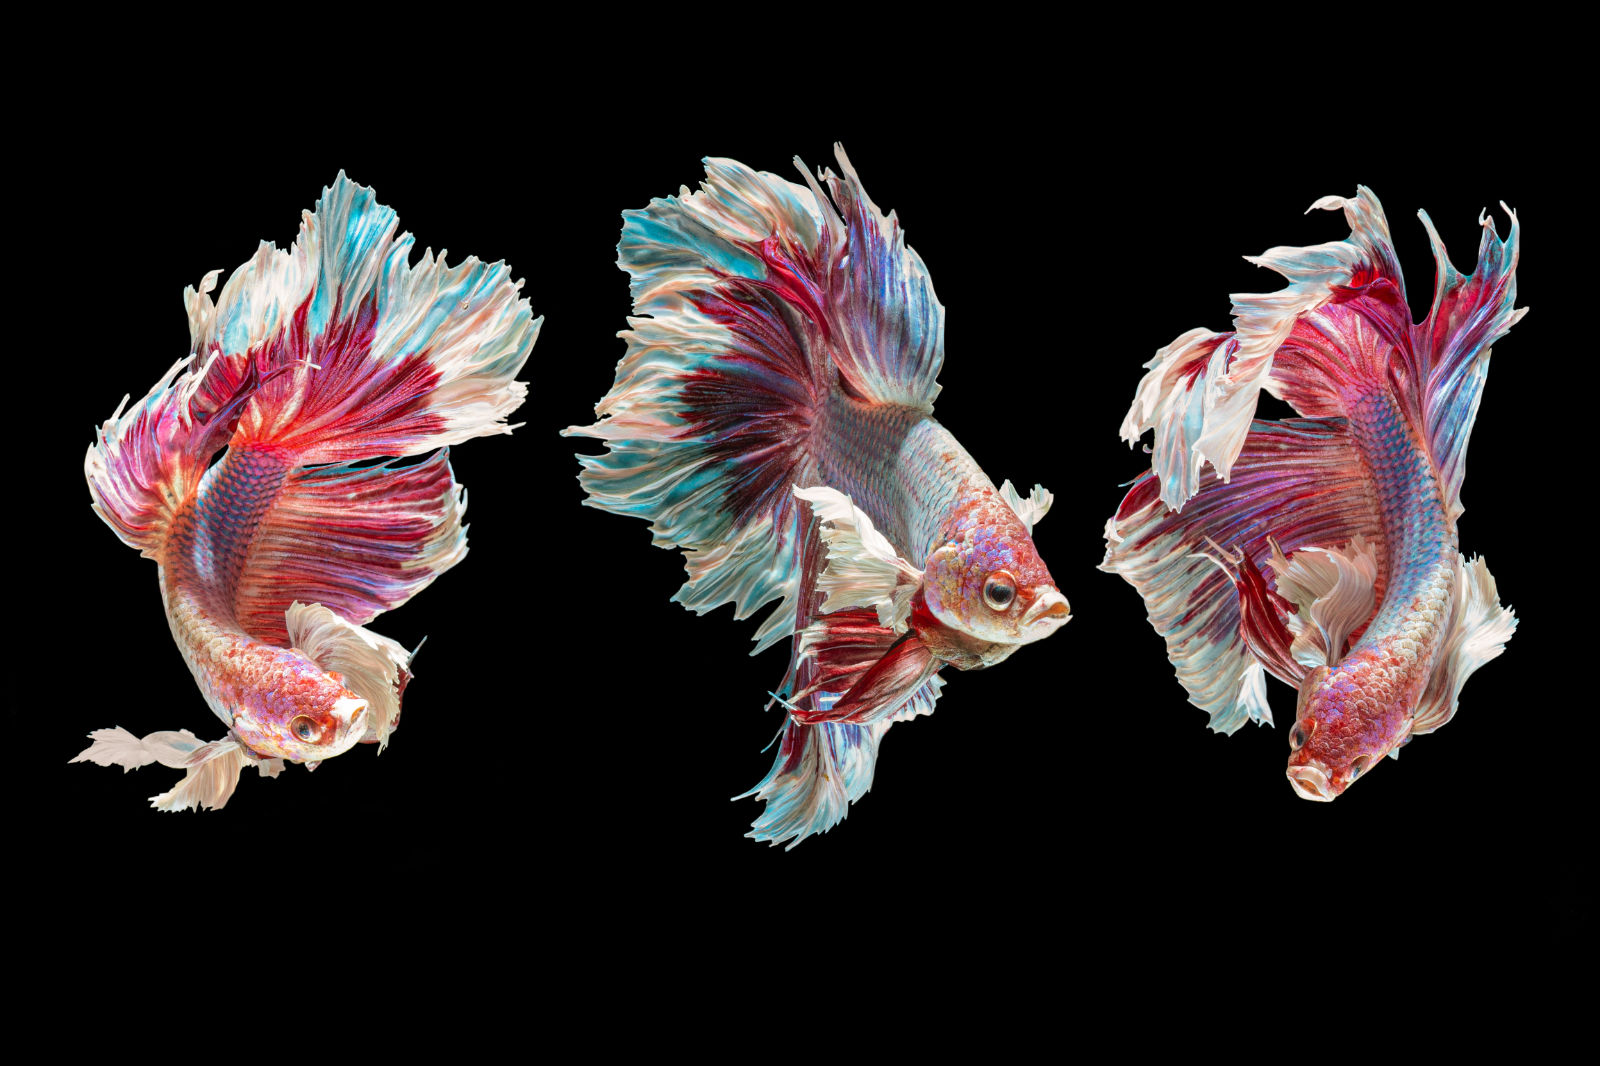 Pesce combattente (Betta splendens) - Tre pesci Bianchi/Rosa/Viola